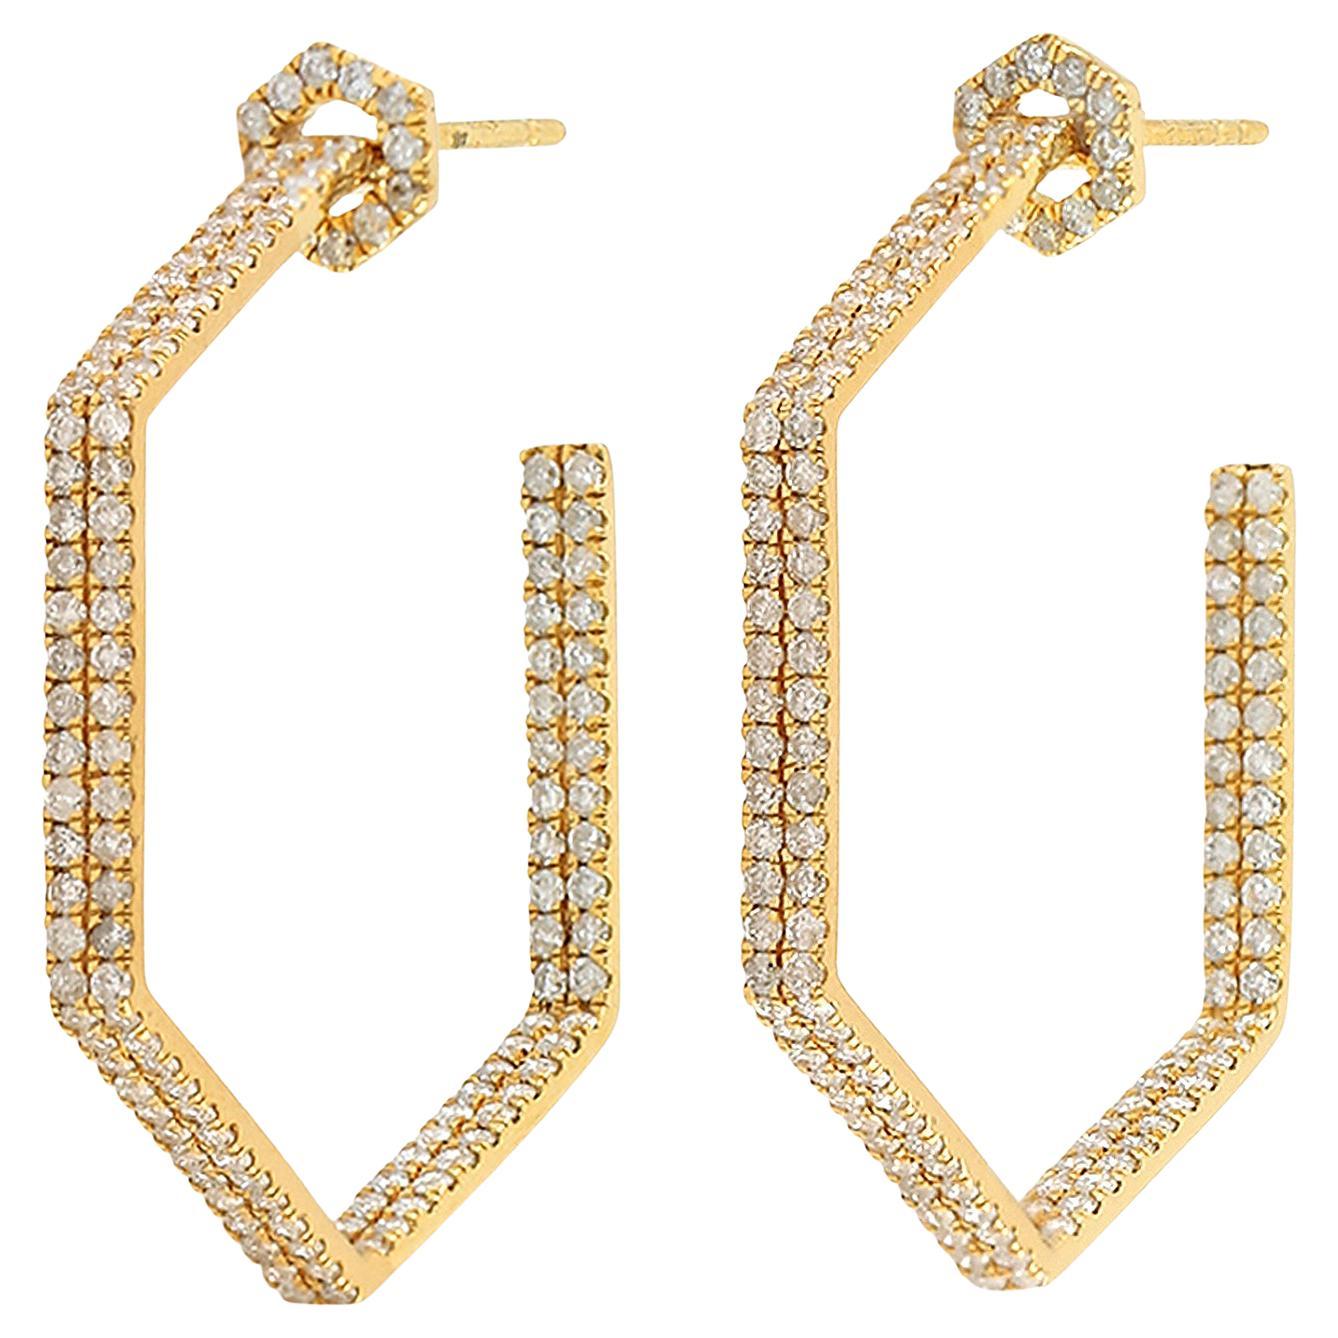 Geometric Shaped Dangle Earrings With Diamonds made in 18k yellow gold